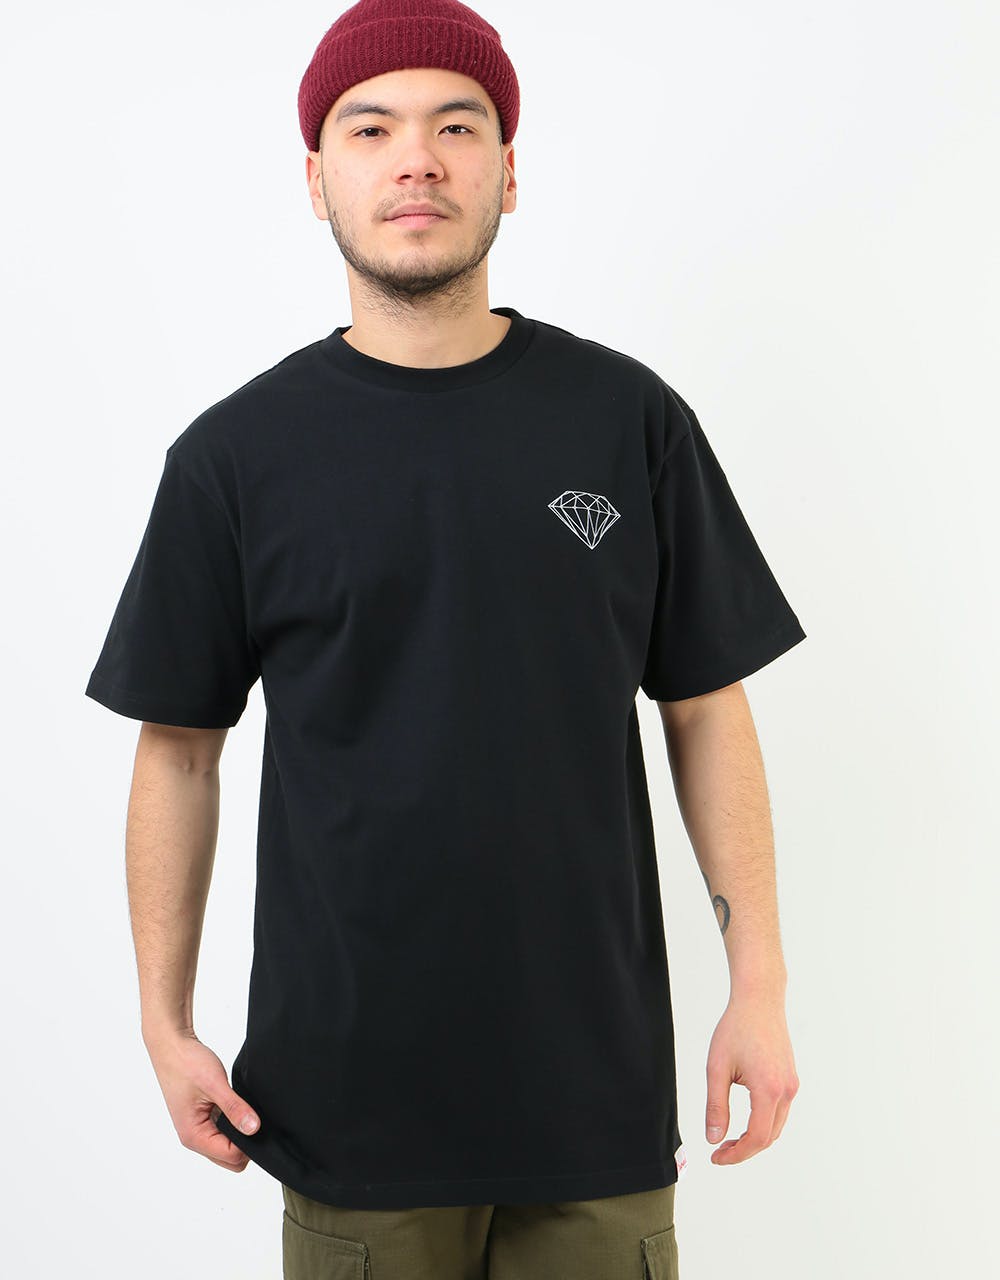 Diamond Brilliant T-Shirt - Black